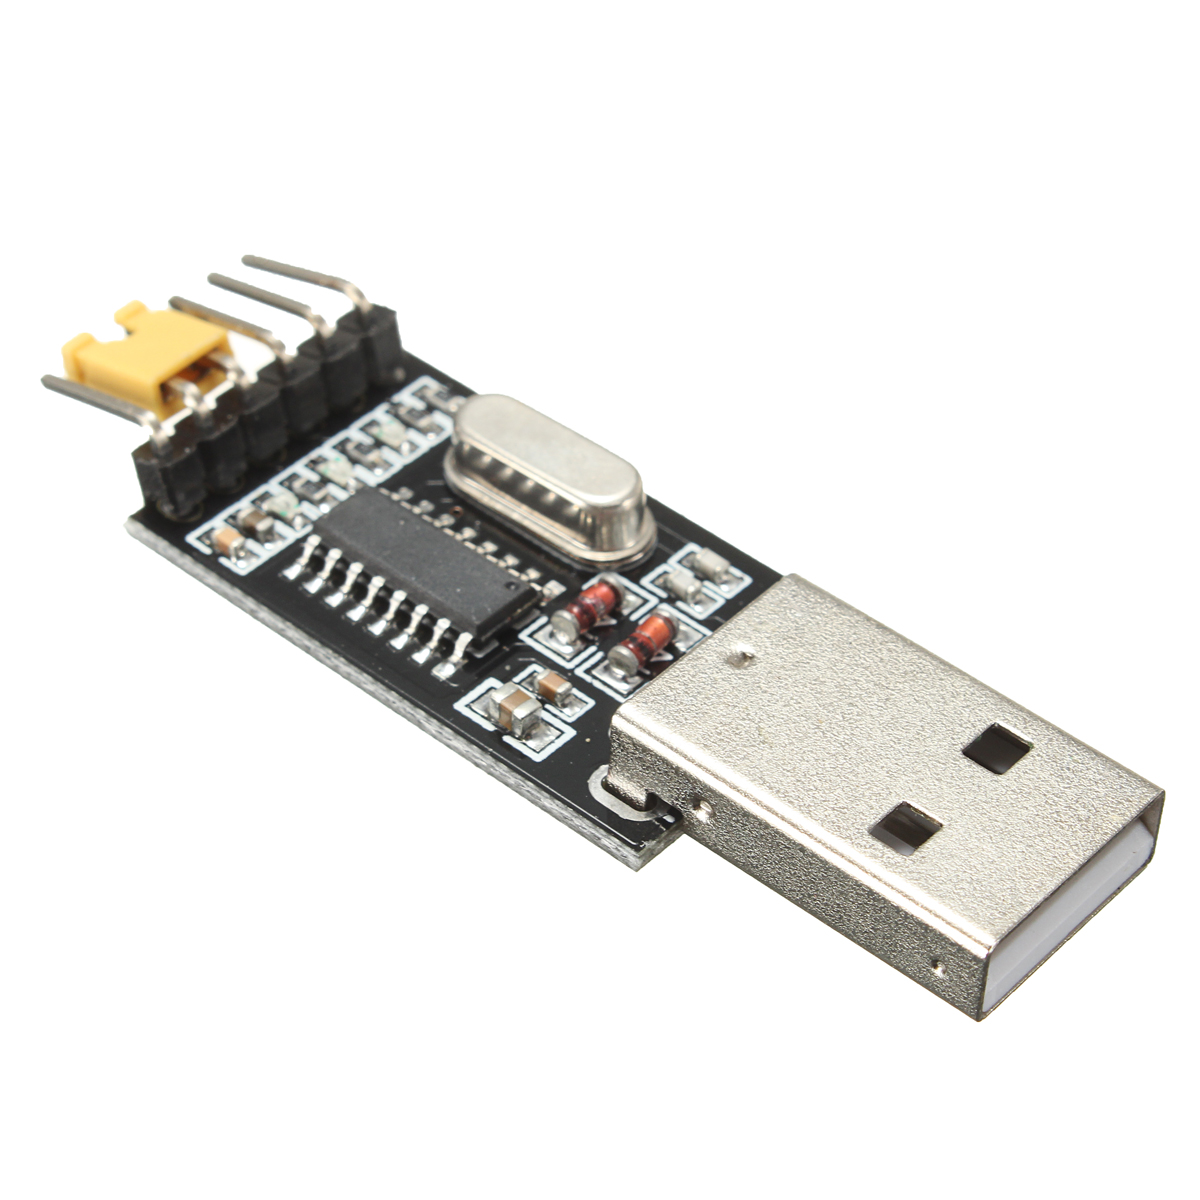 5pcs-33V-5V-USB-to-TTL-Convertor-CH340G-UART-Serial-Adapter-Module-STC-1314966-2